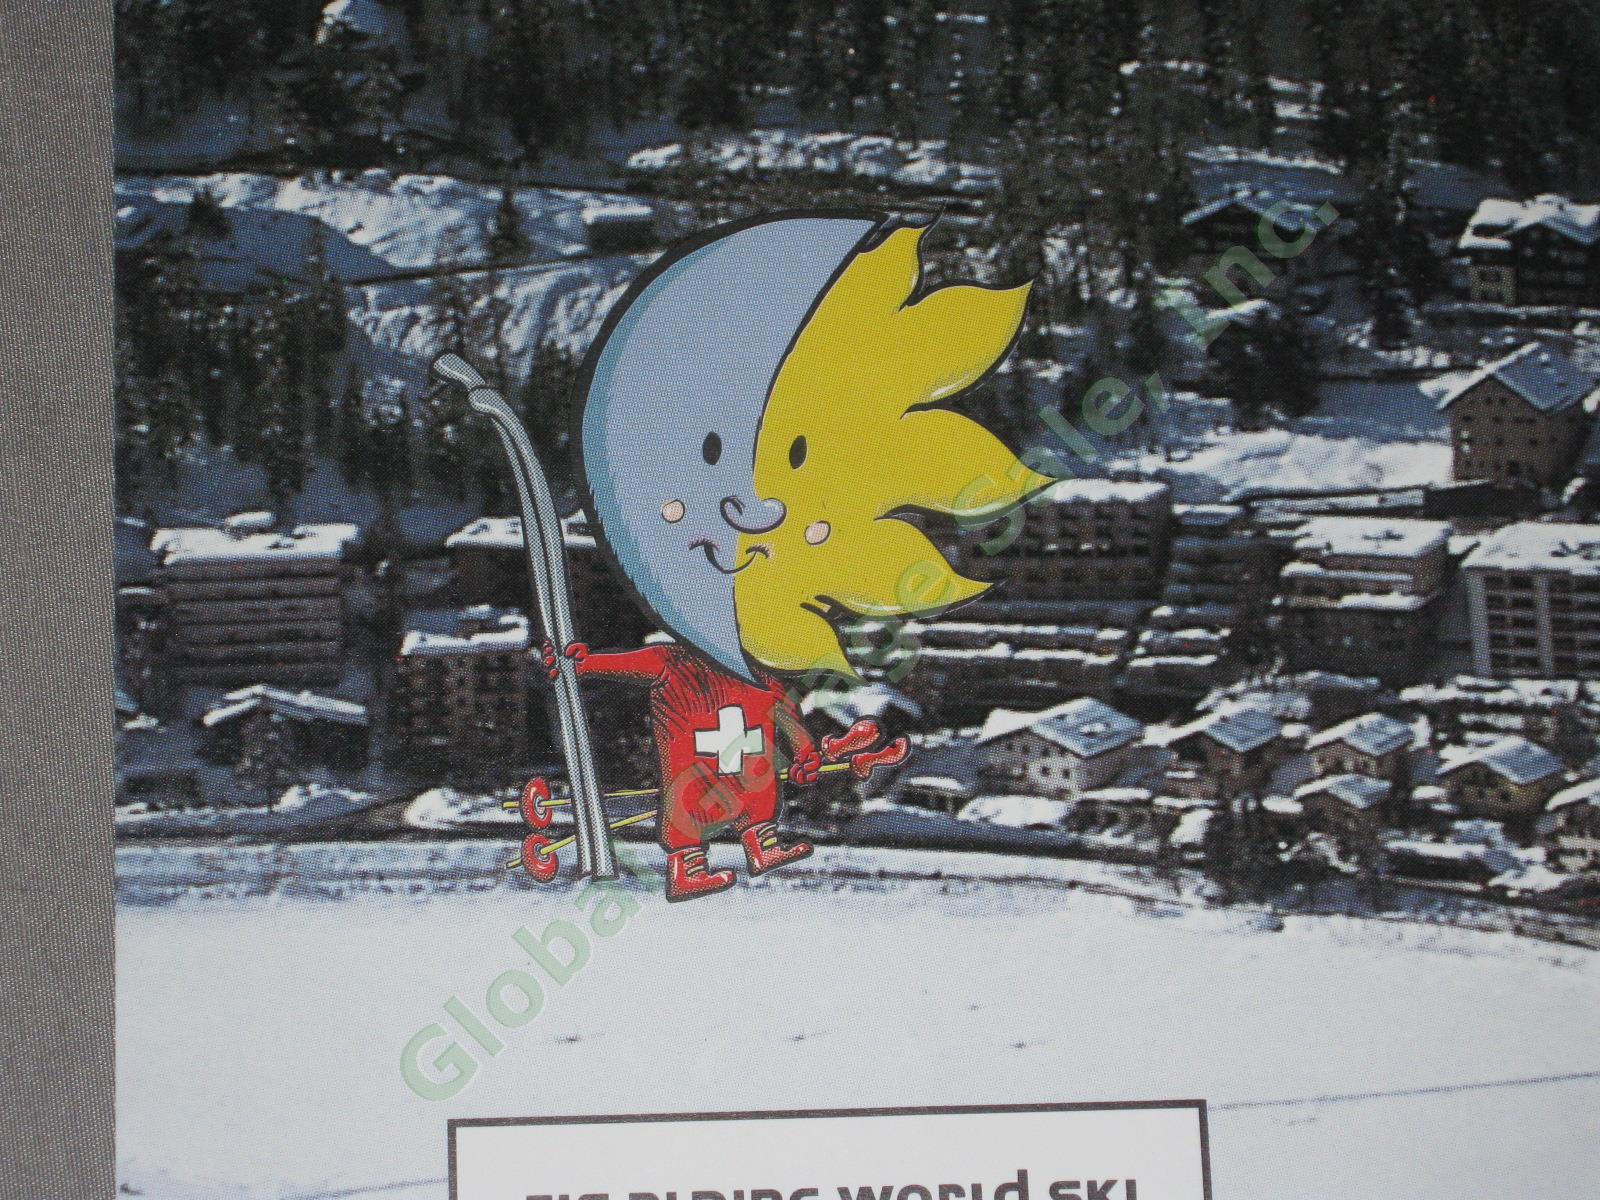 2003 FIS Alpine World Ski Racing Championships Poster St Moritz Switzerland NR 5